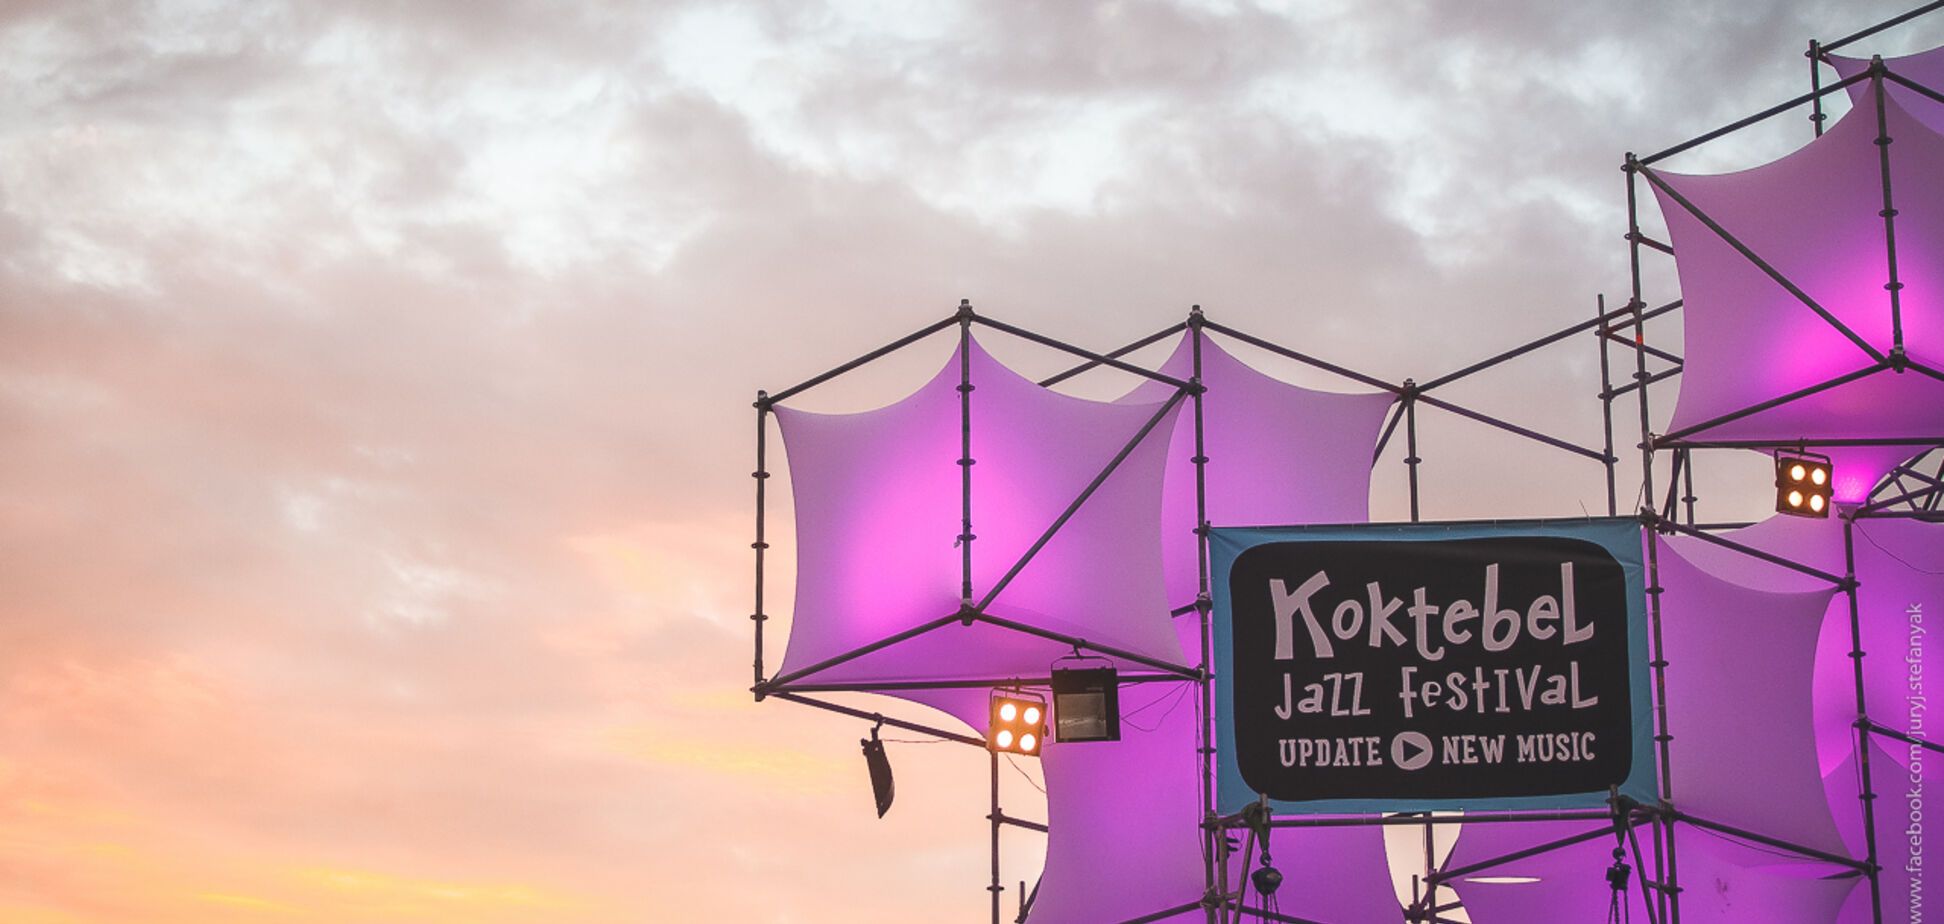 Koktebel Jazz Festival представил полный лайн-ап всех 4 сцен